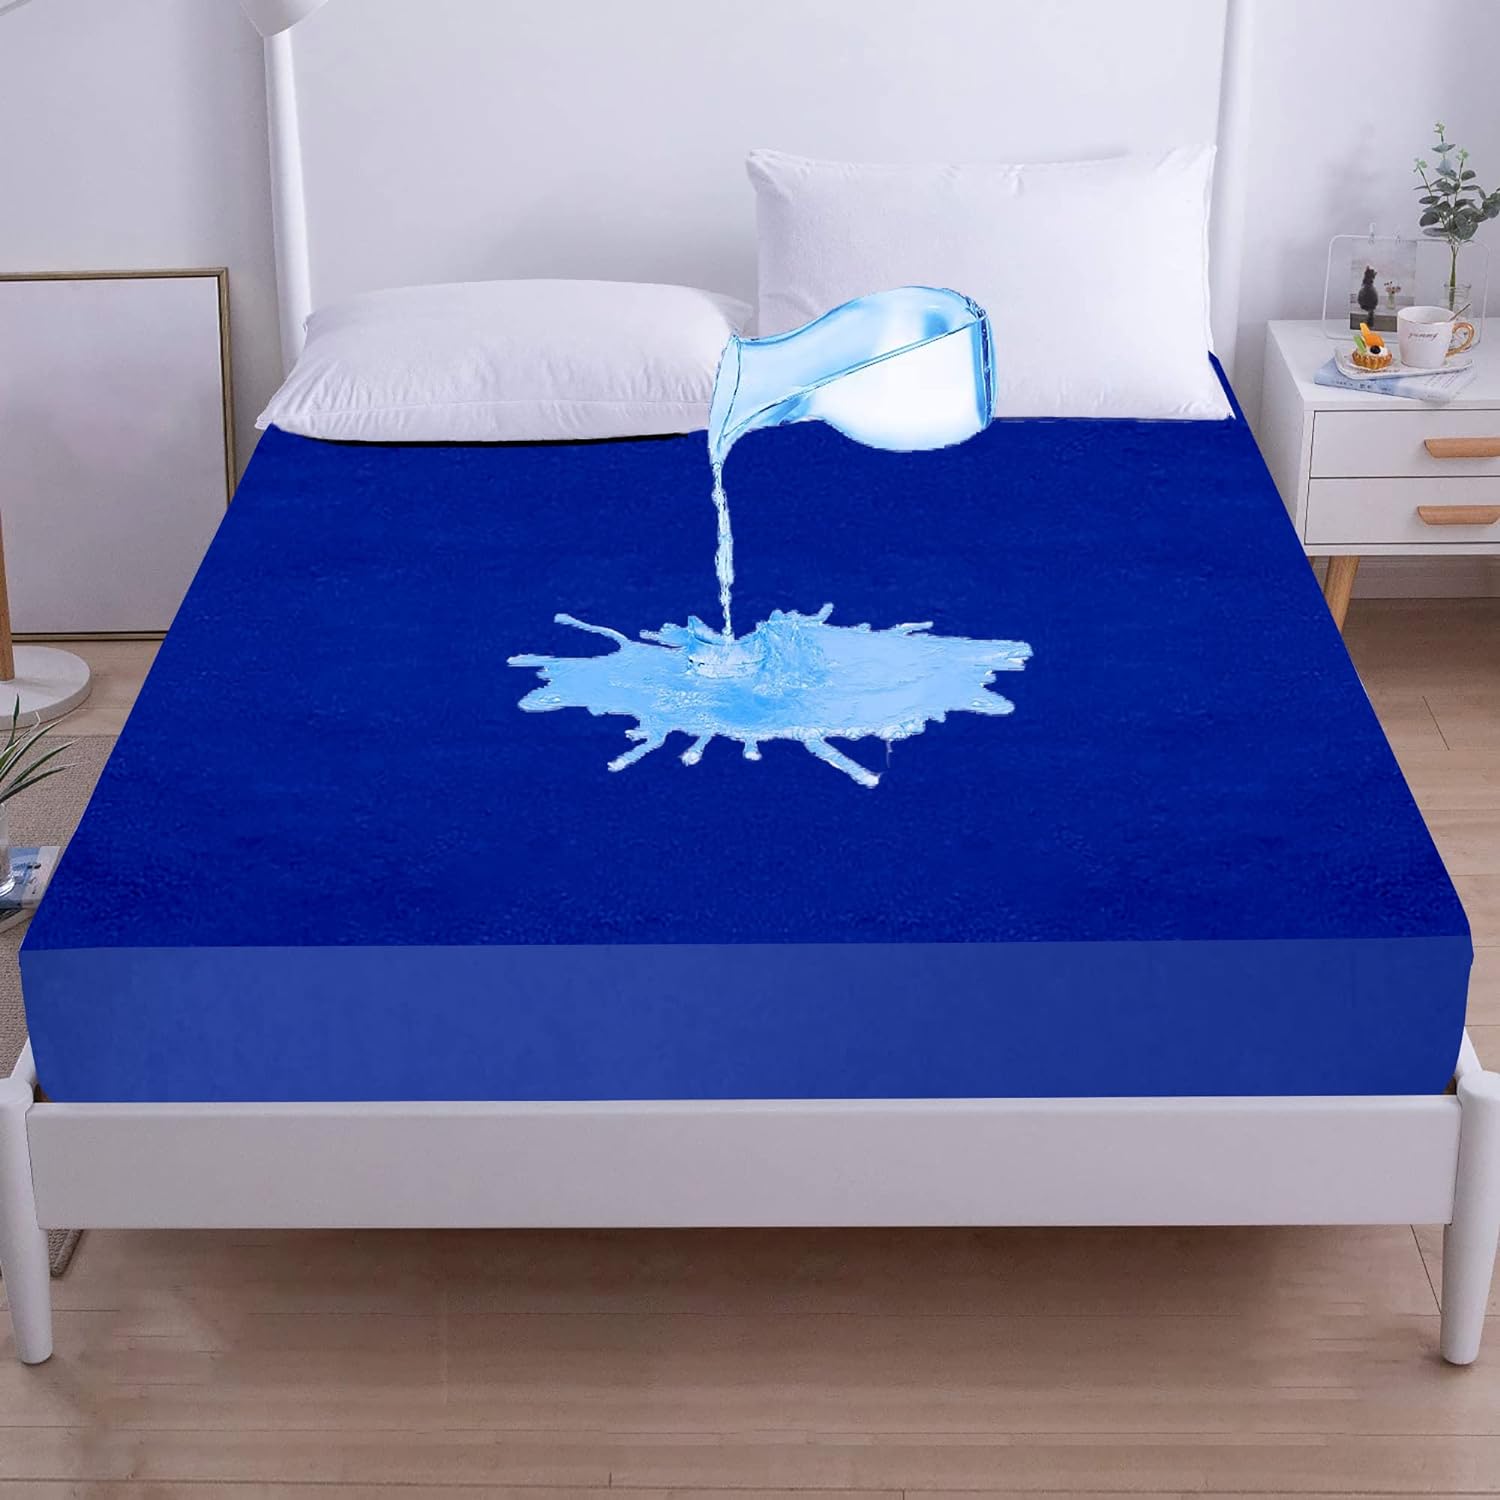 Waterproof Cotton Elastic Bed Cover